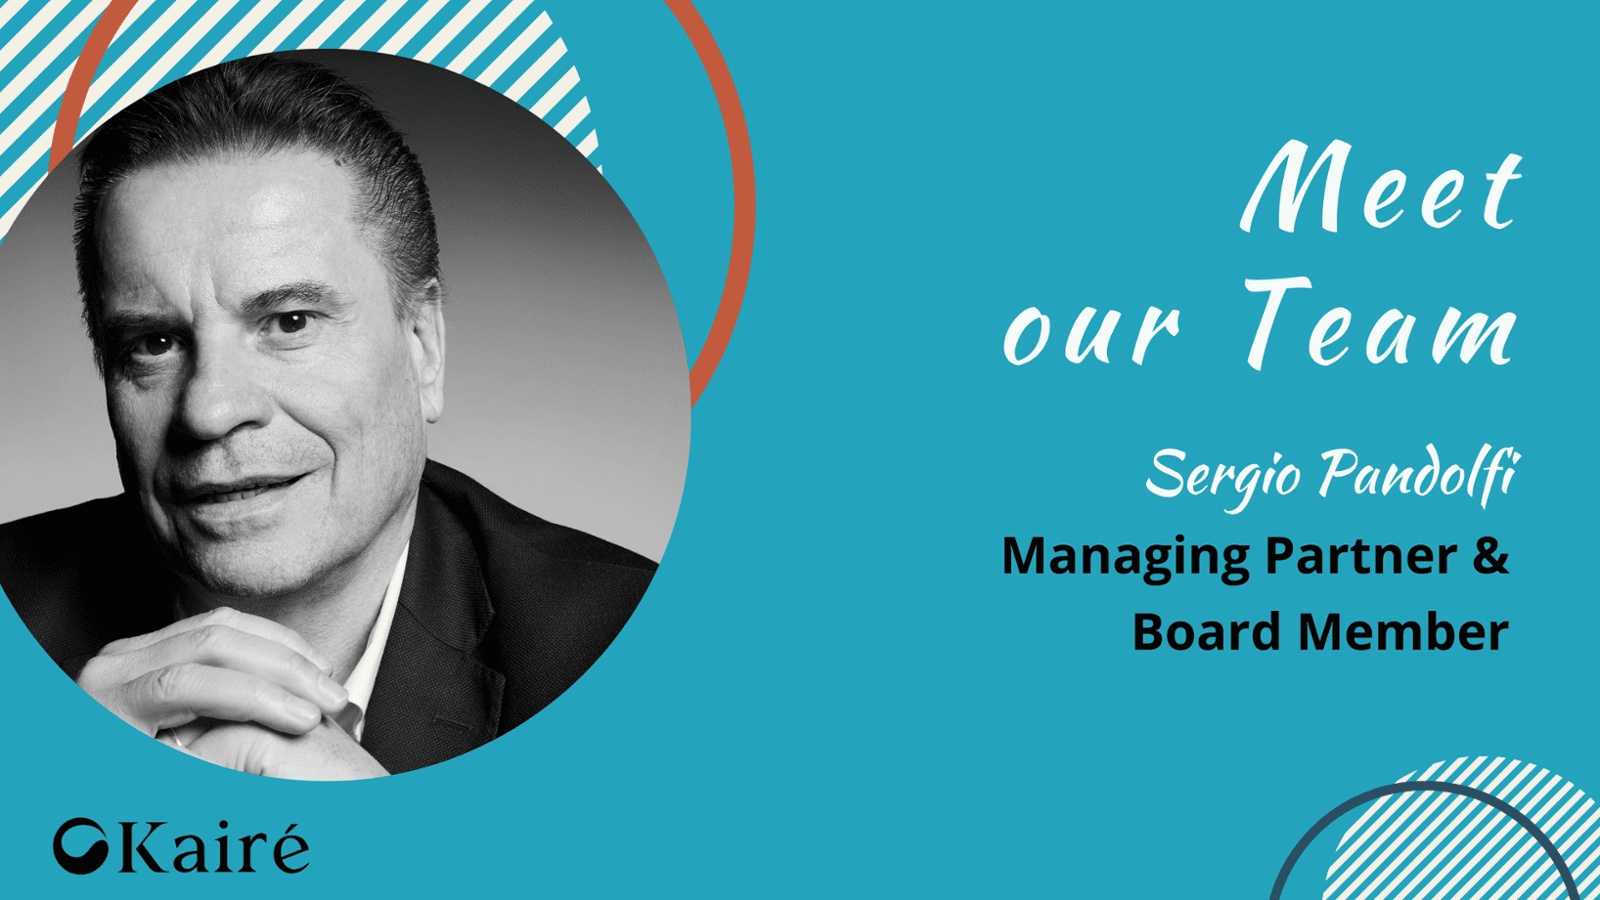 Meet our Team: Sergio Pandolfi, Managing Partner & Board Member